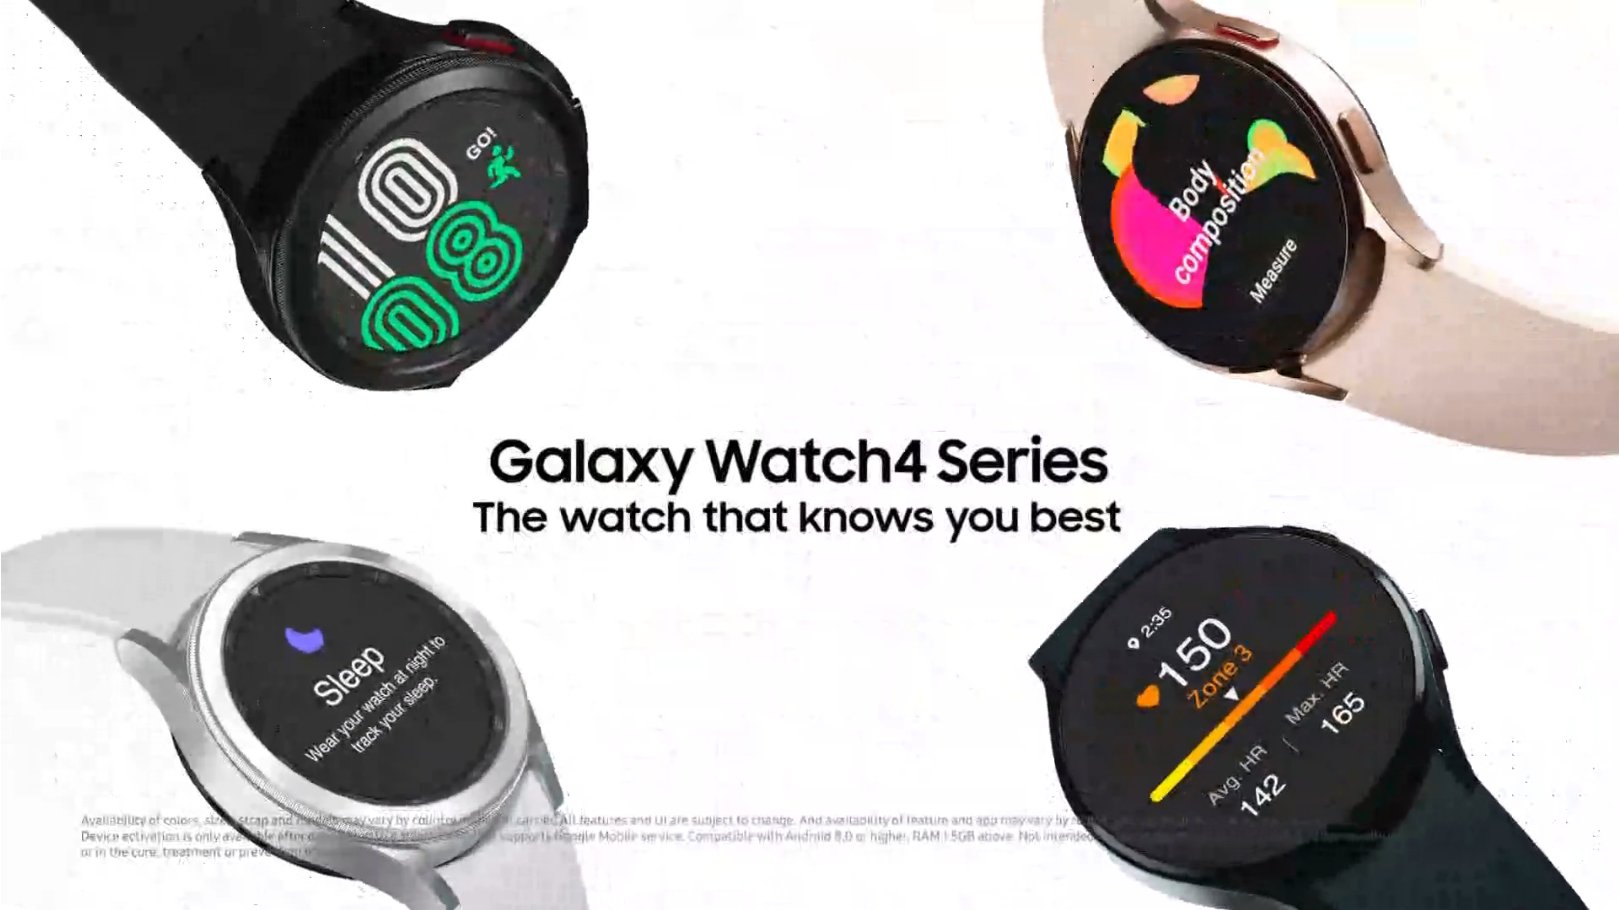 Samsung Galaxy Watch 4 and Galaxy Watch 4 Classic product slides leak